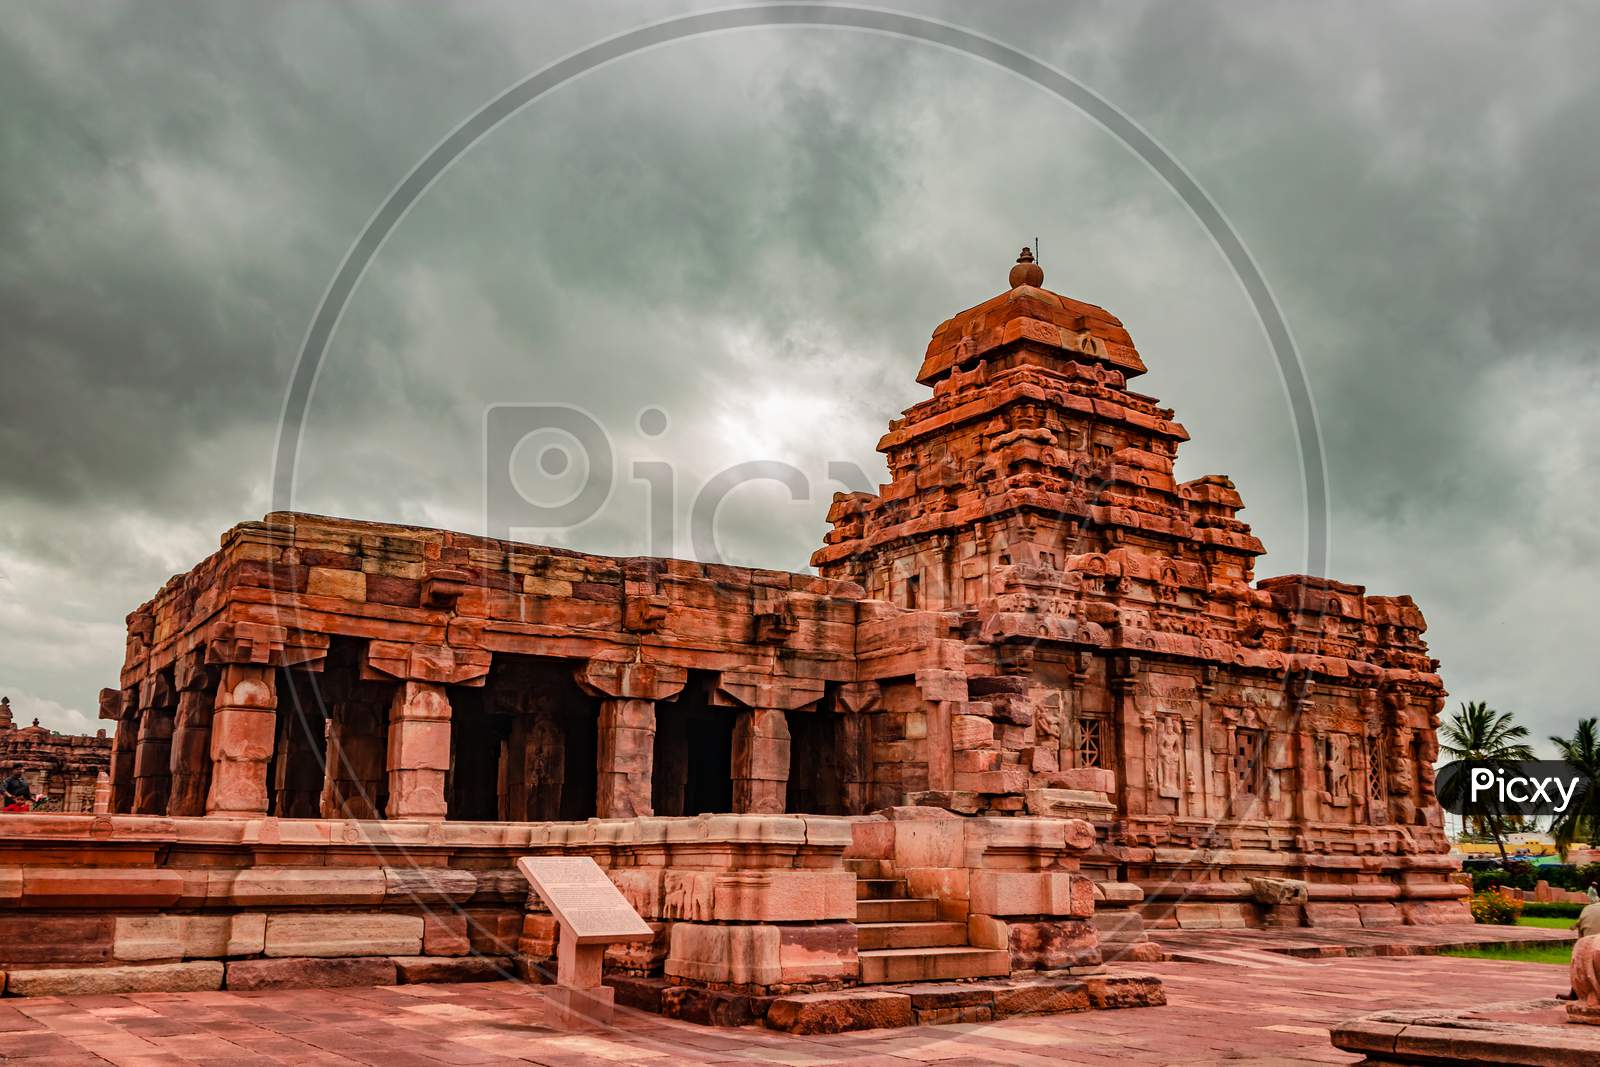 Sangameshwara Temple Pattadakal Breathtaking Stone Art From Different Angle With Dramatic Sky